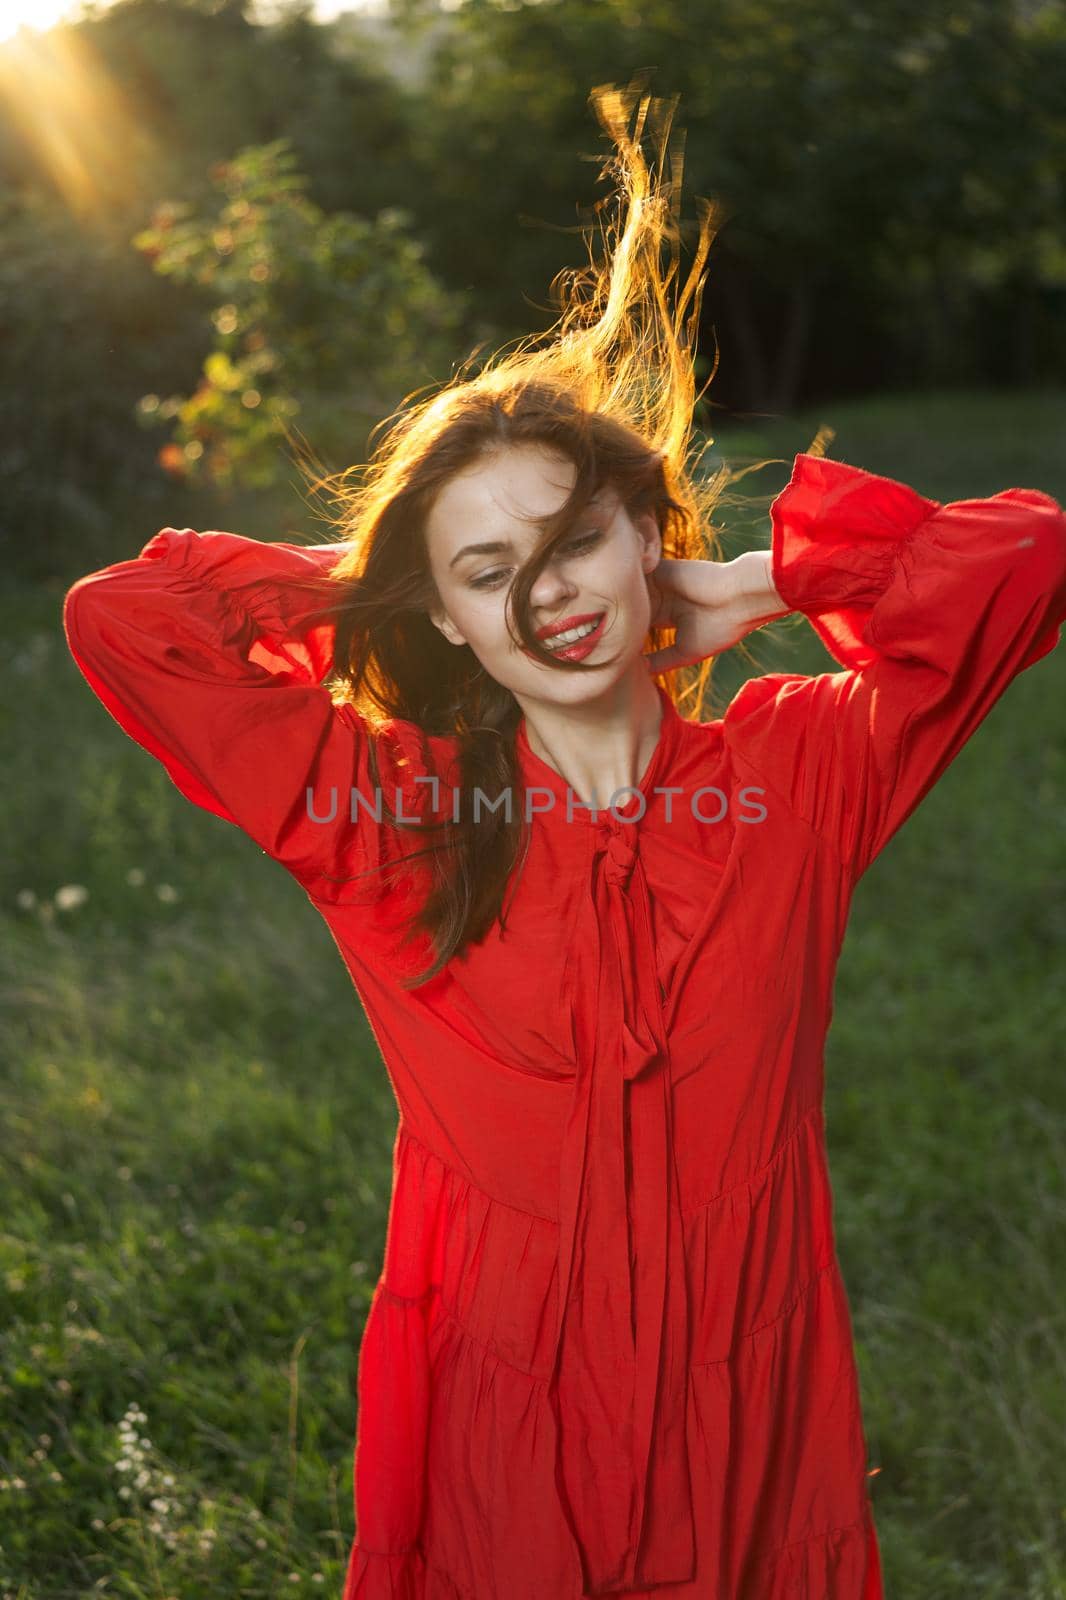 woman in red dress posing nature sun fun. High quality photo